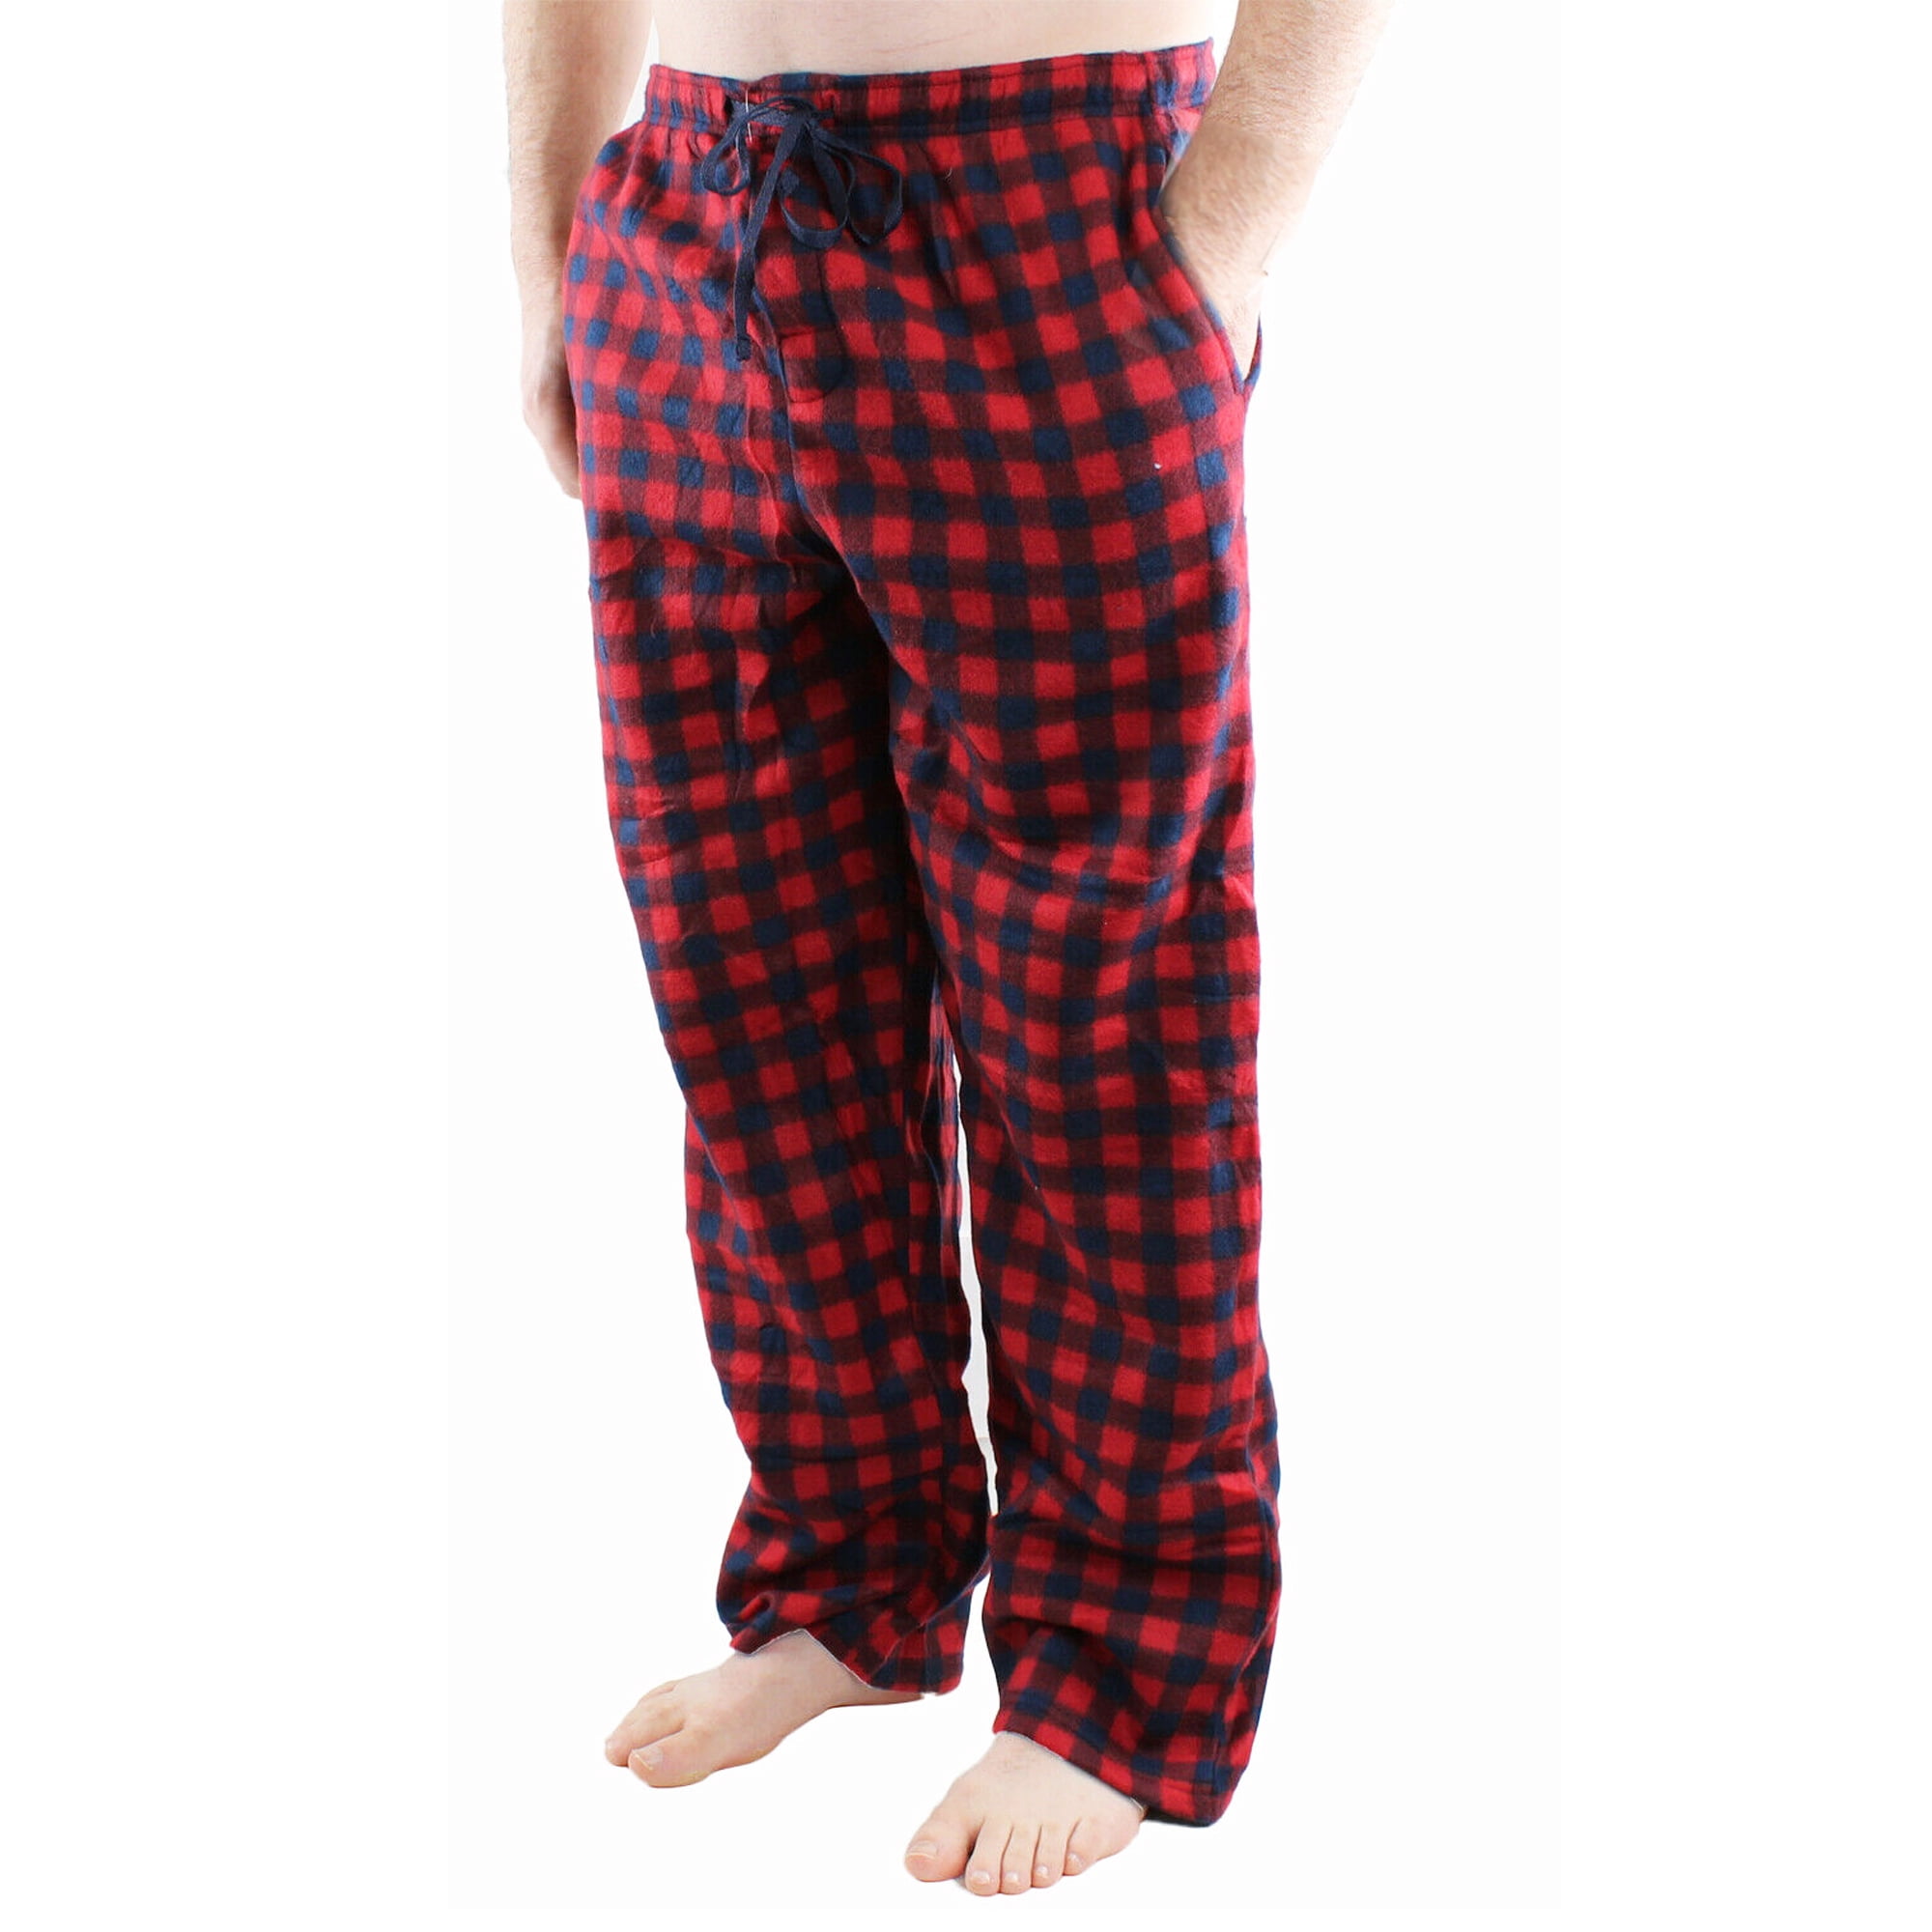 Comfy Lifestyle Men's Fleece Plaid Pajama Pants, Soft and Cozy